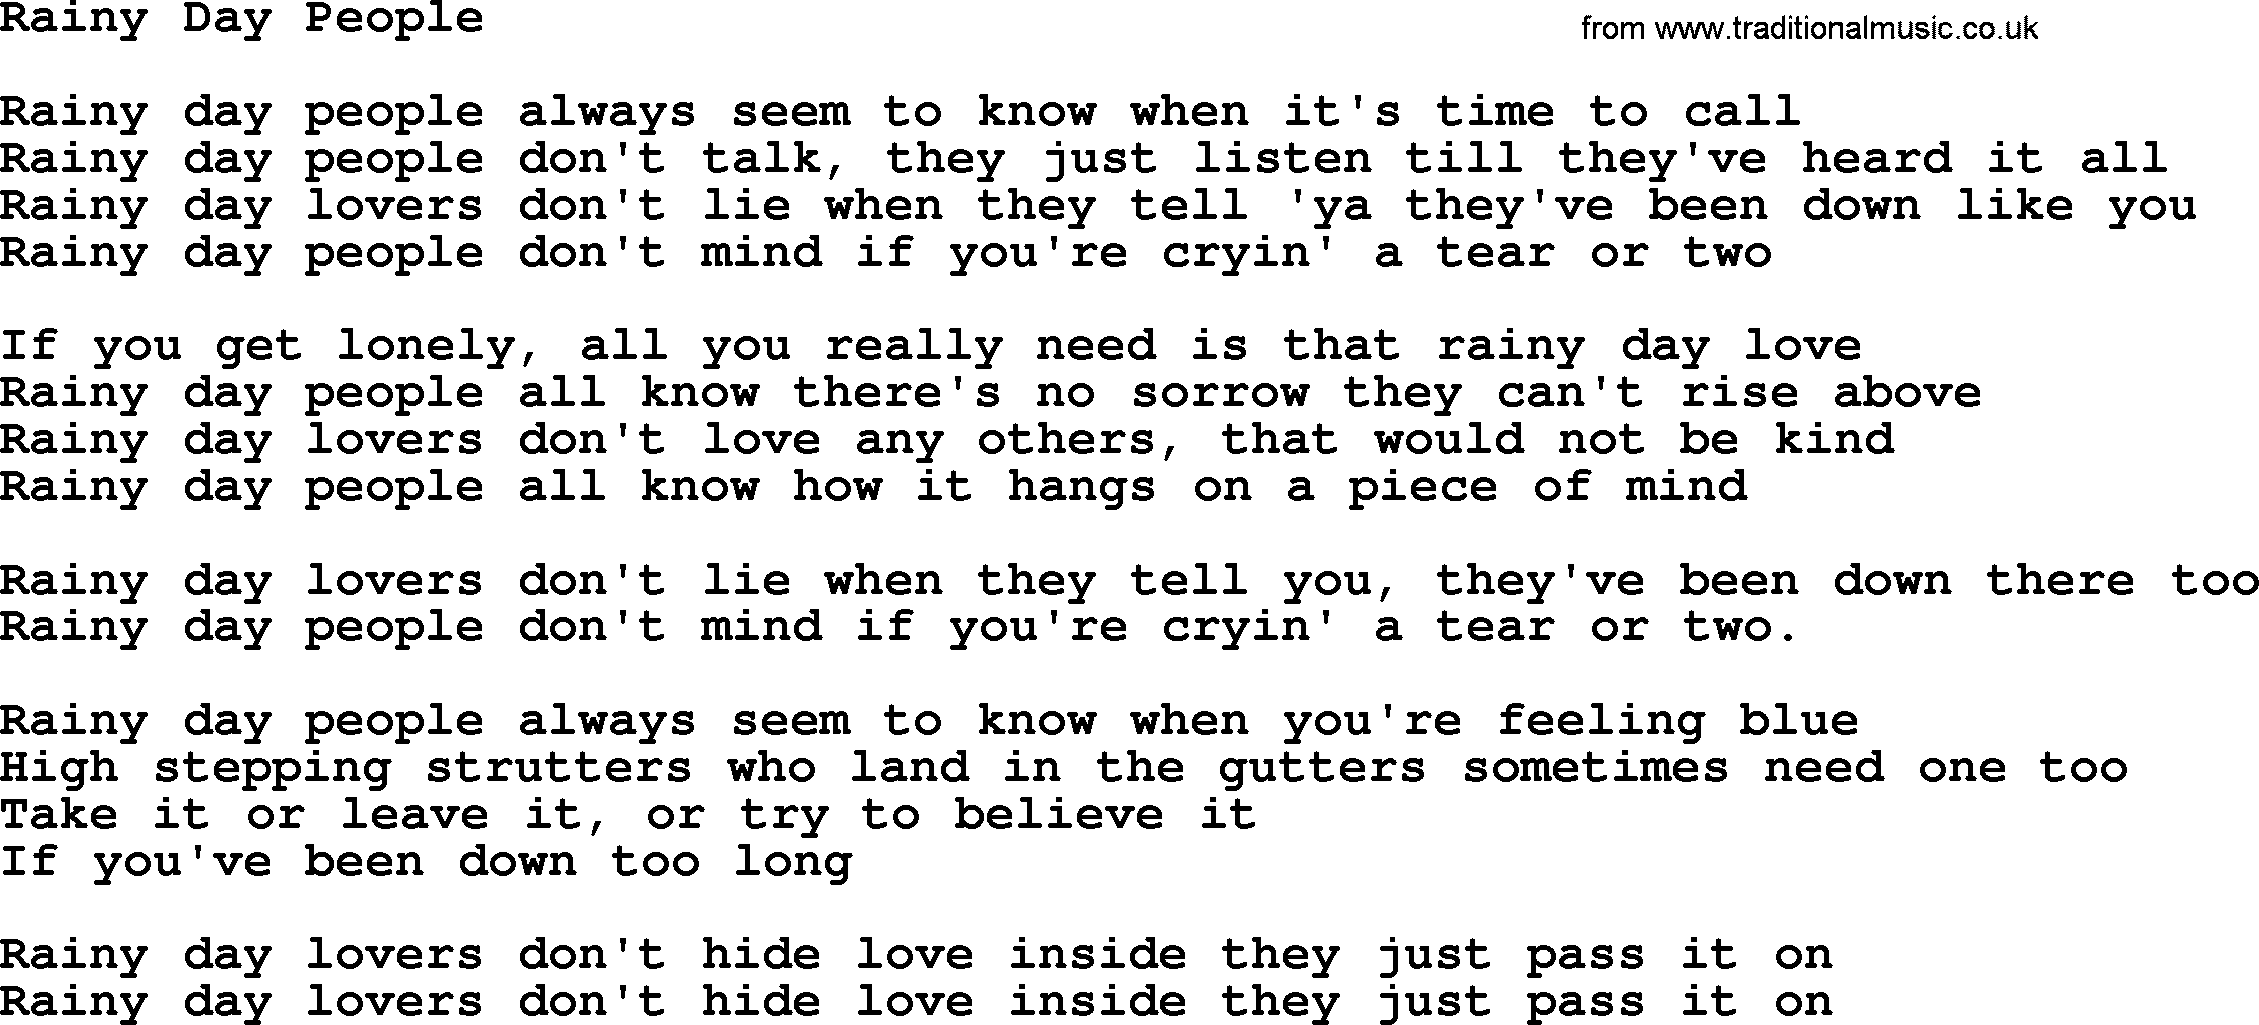 Gordon Lightfoot song Rainy Day People, lyrics